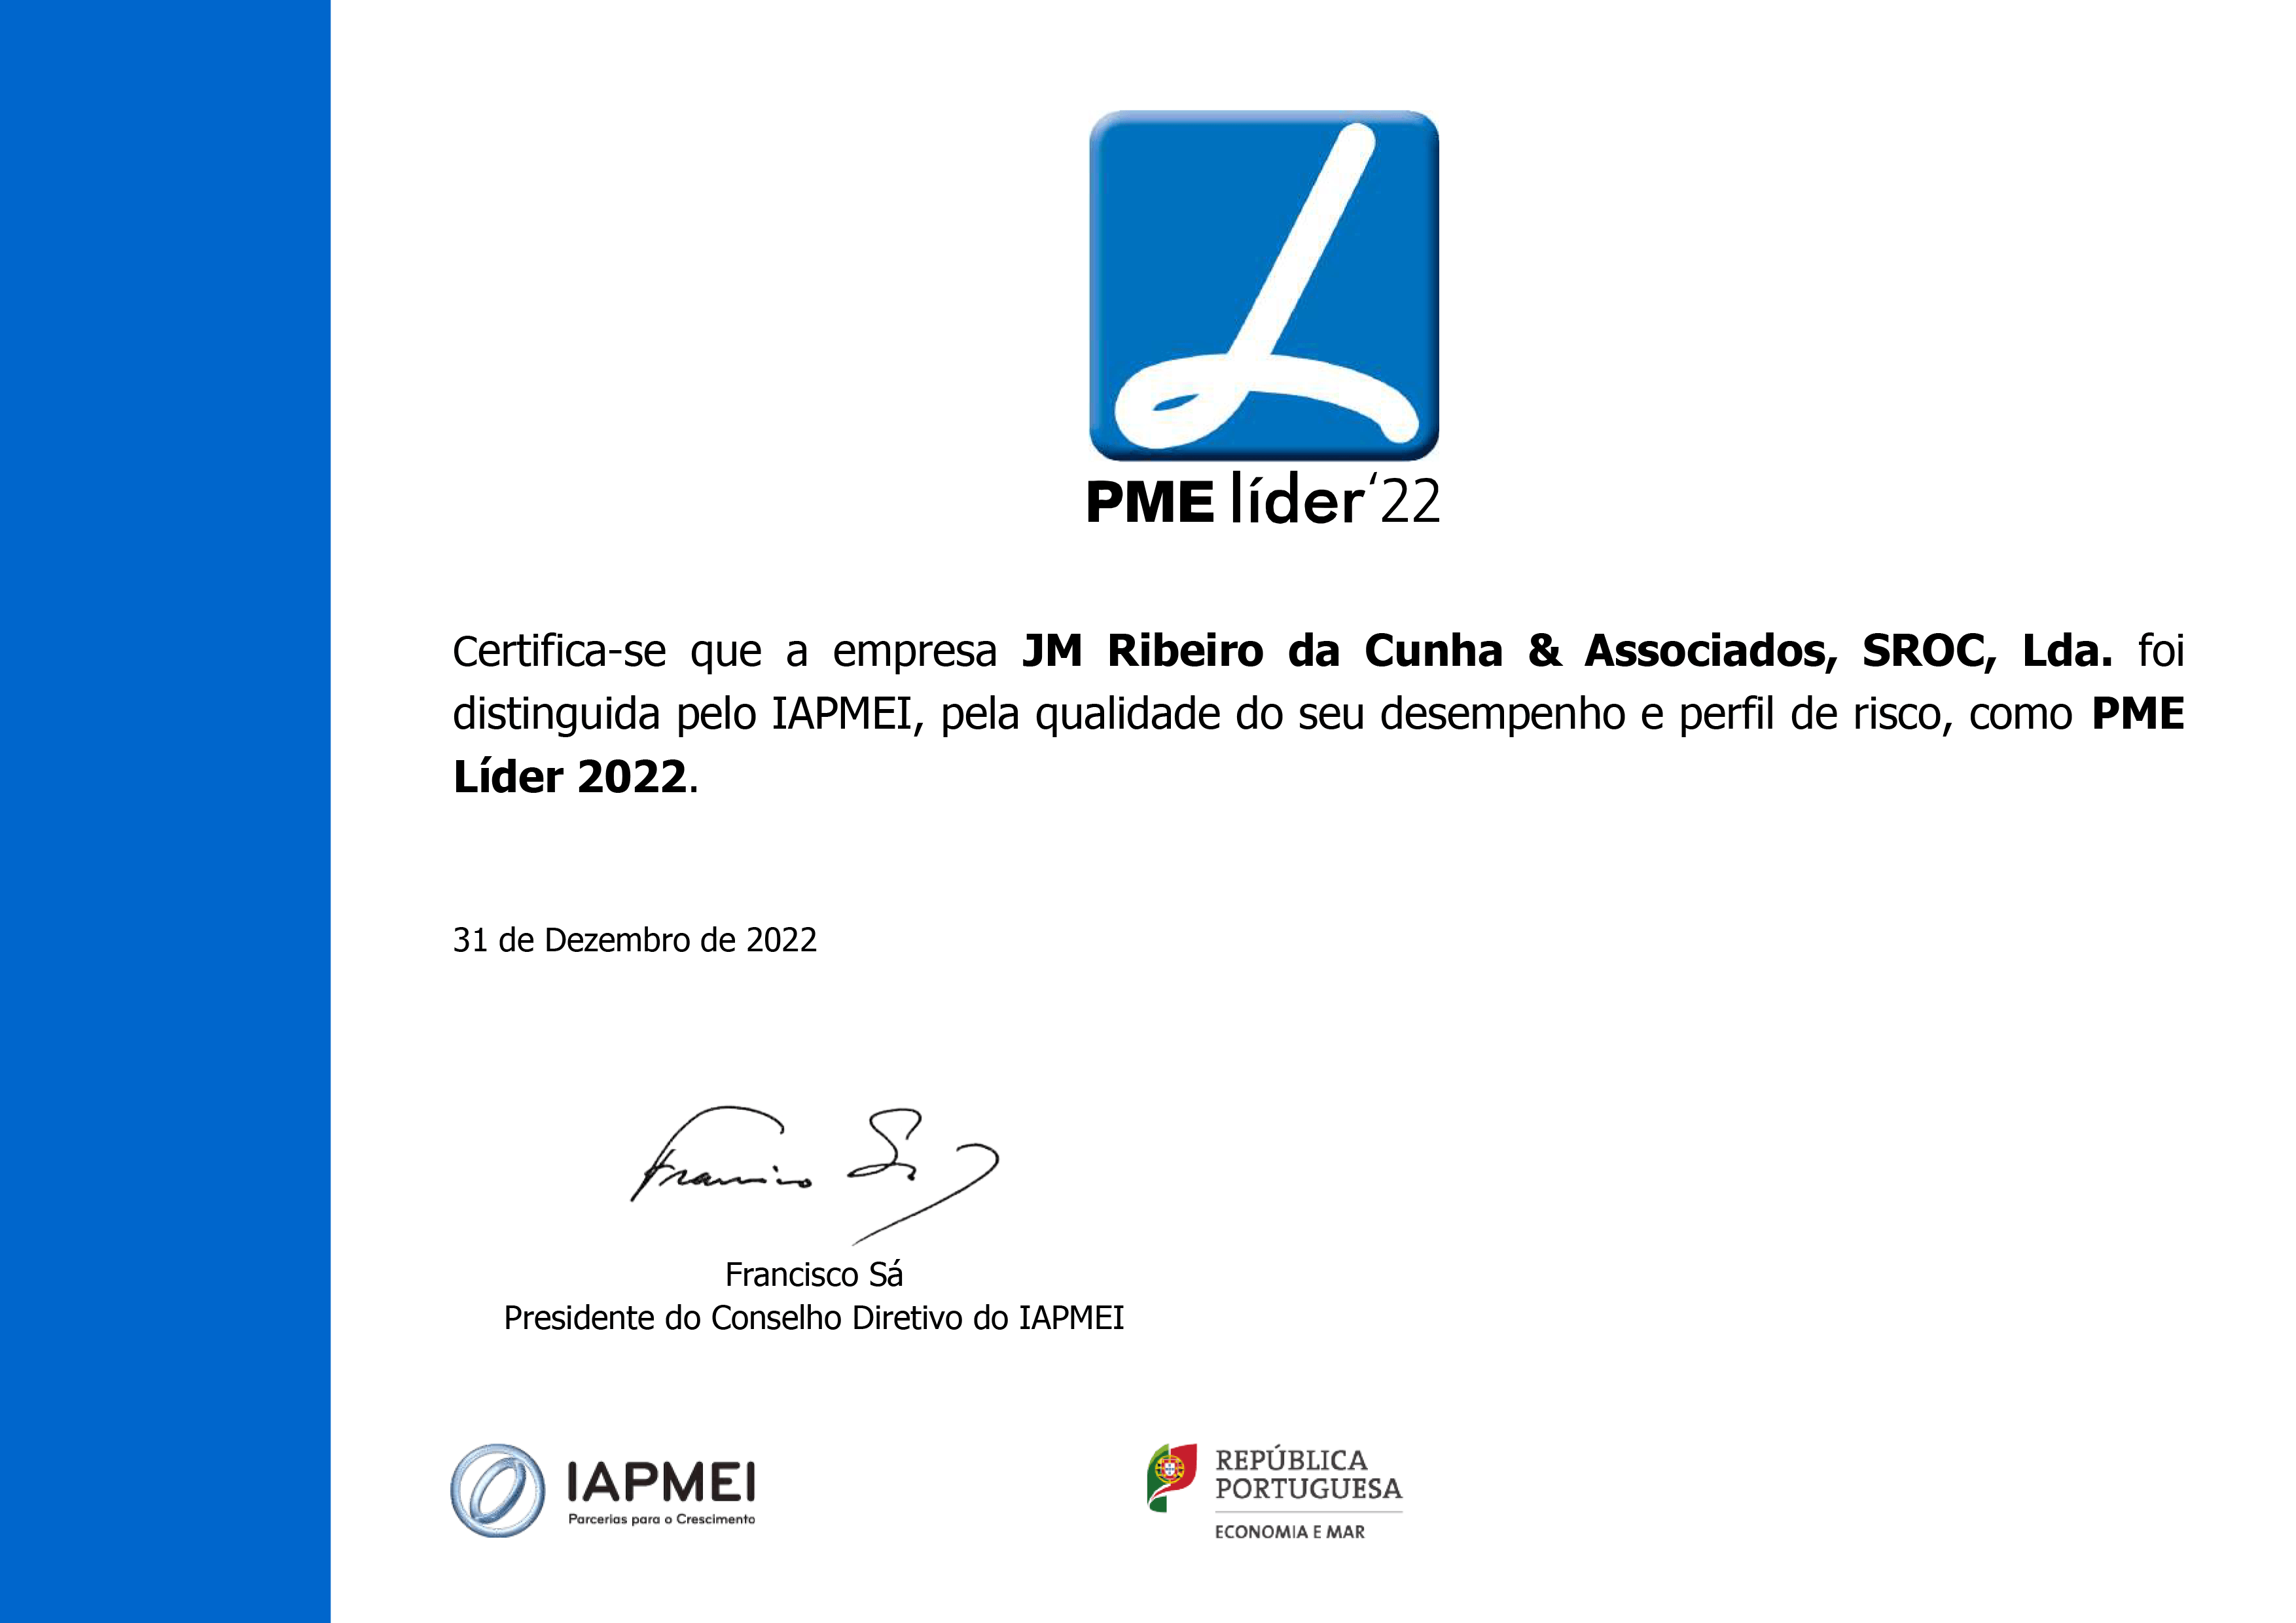 JM Ribeiro da Cunha & Associados distinguida PME Líder 2022